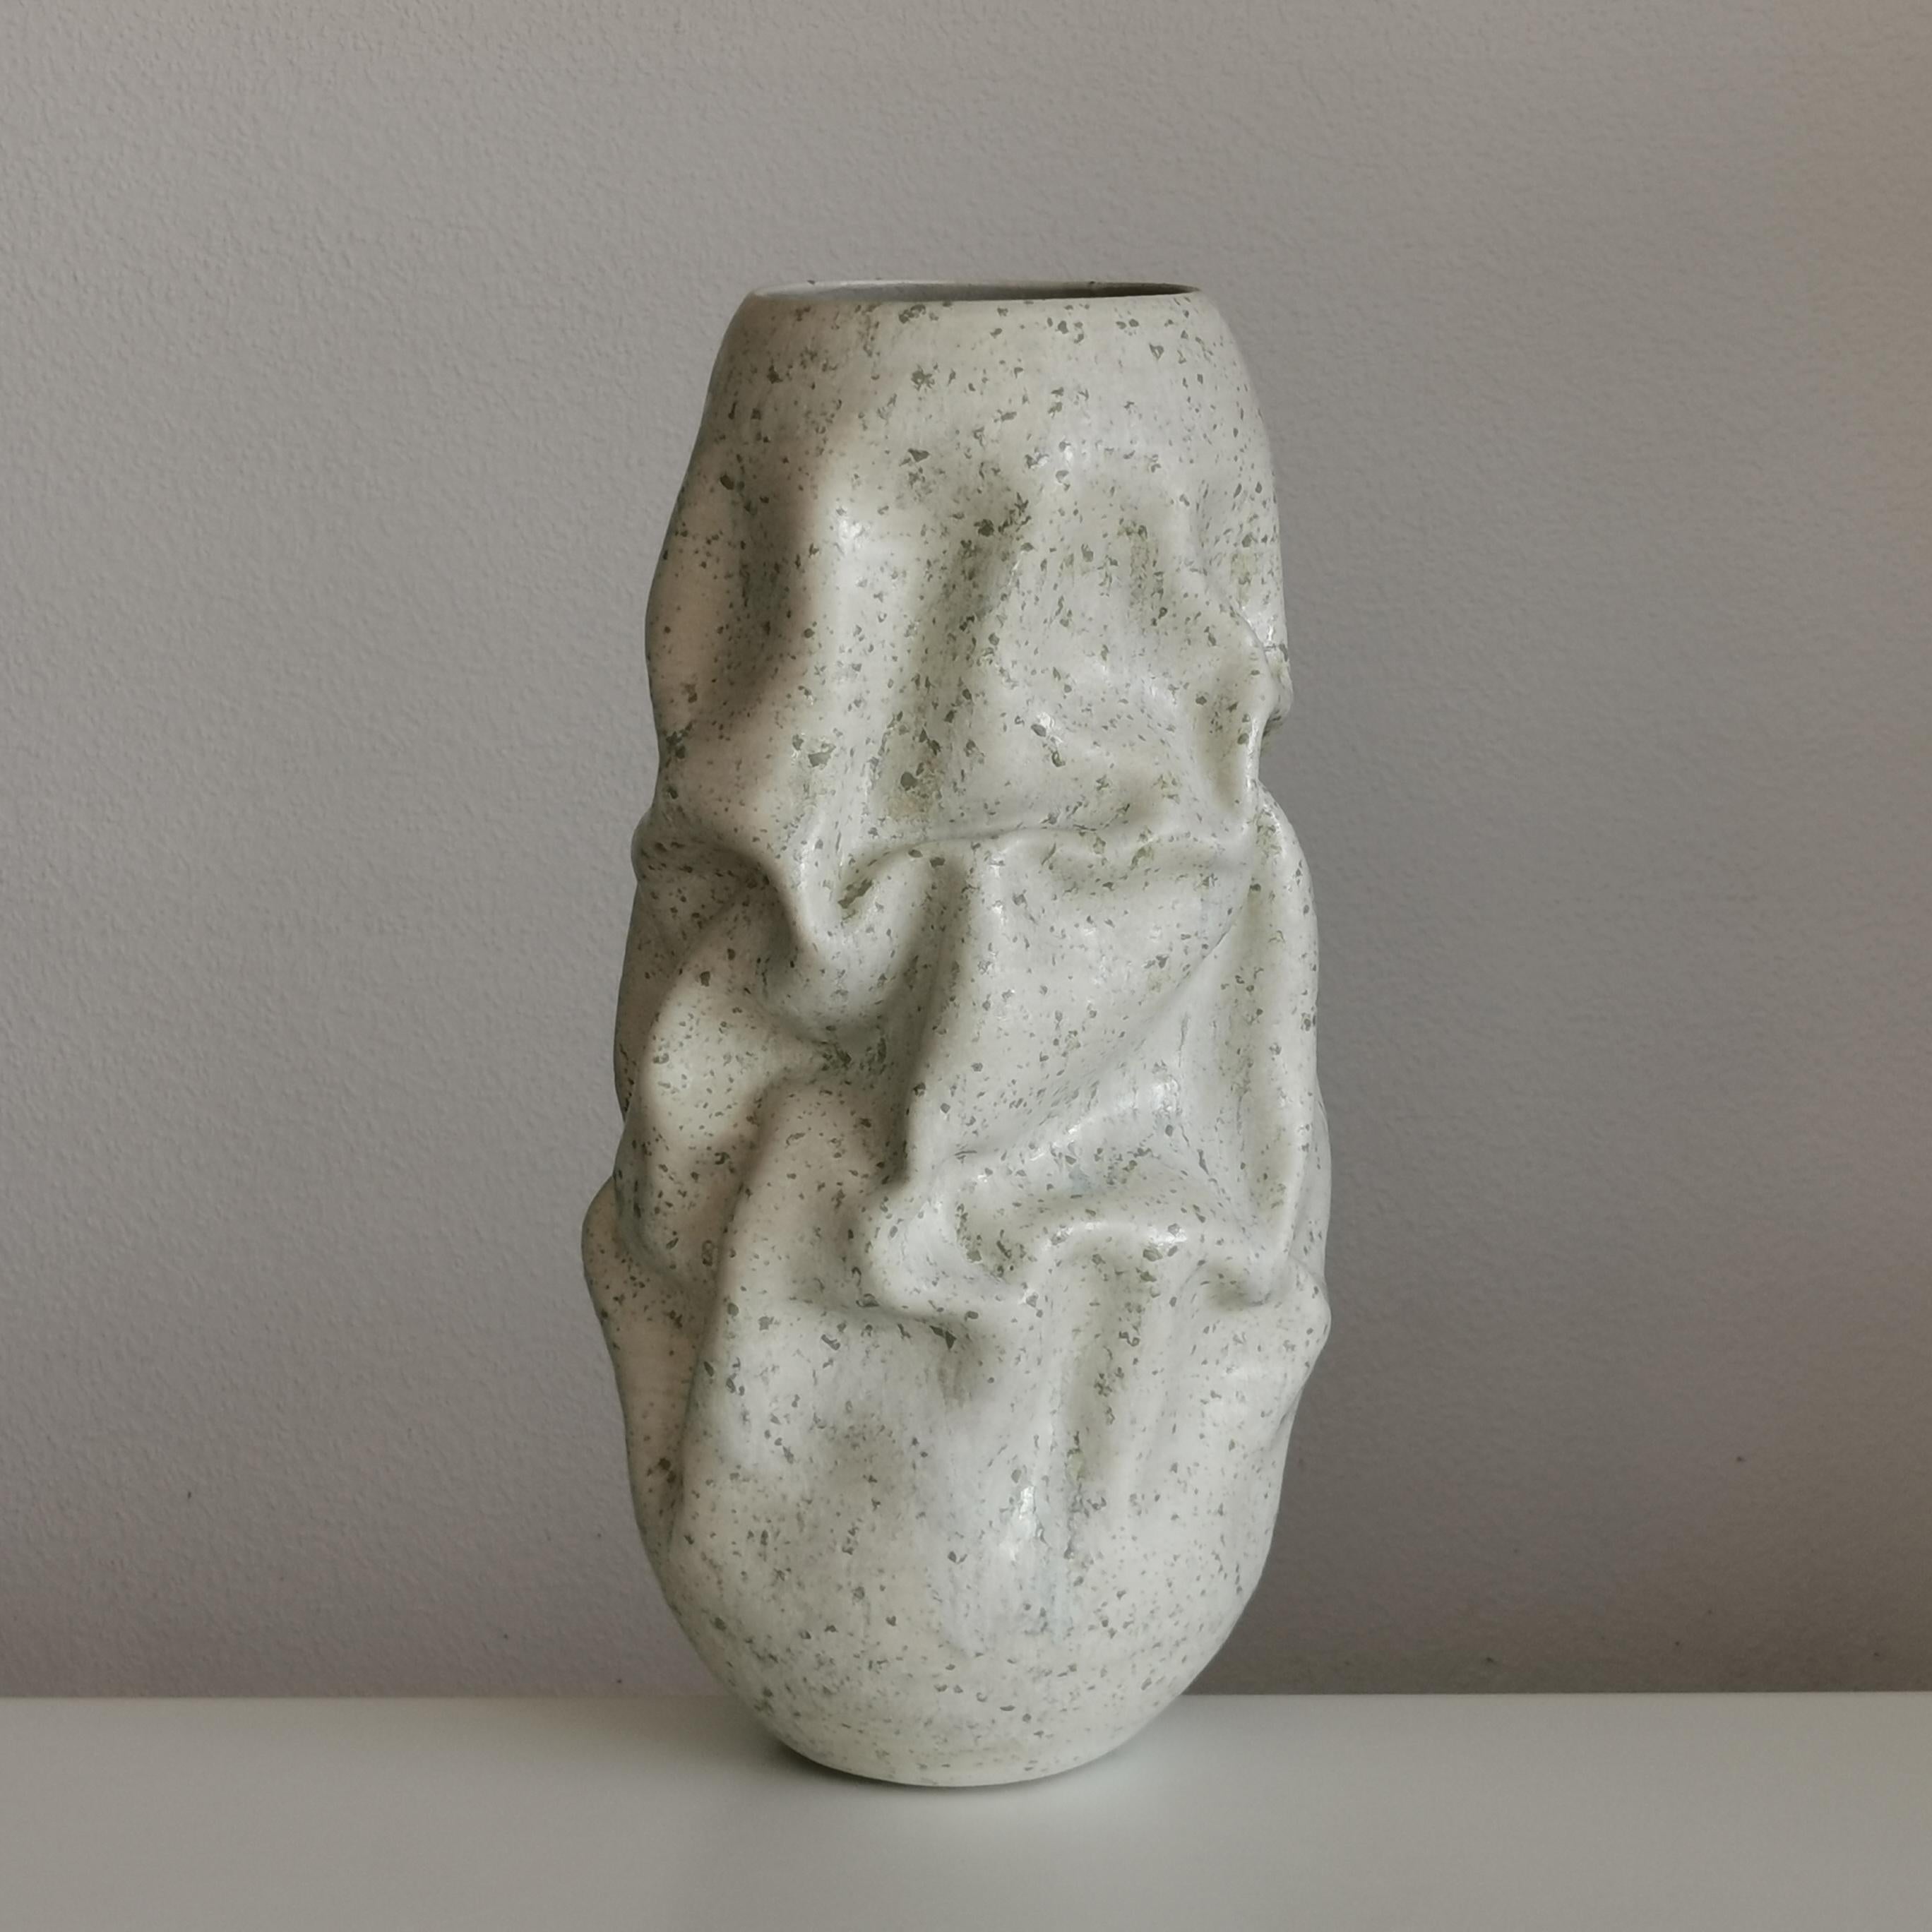 Medium White Crumpled Form, Green Chrystals, Vessel No.128, Ceramic Sculpture For Sale 1